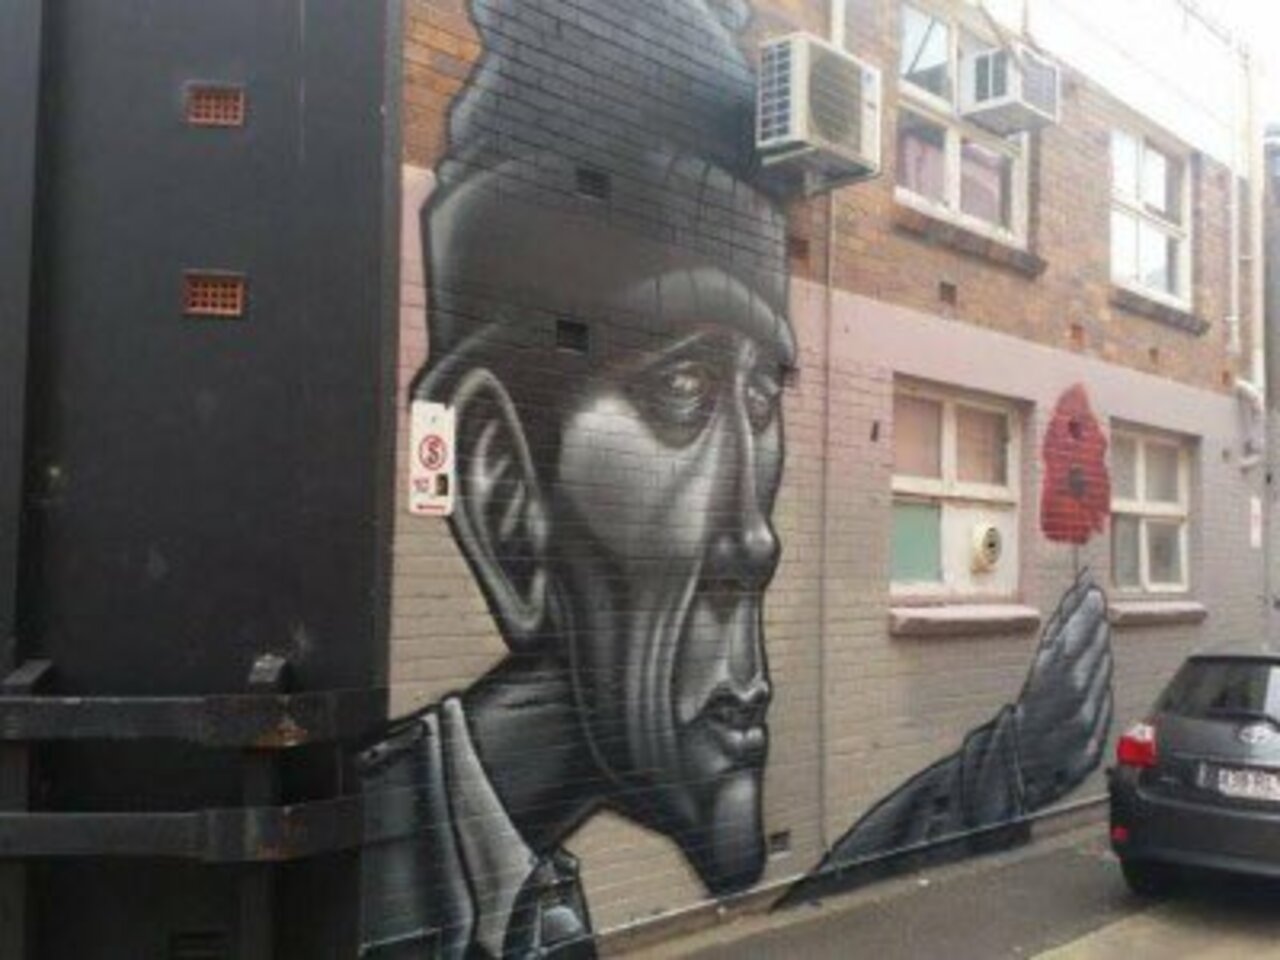 #Mural by adnate #Toowoomba #Australia #Streetart #urbanart #graffiti #art https://t.co/gPMWUOgSBD